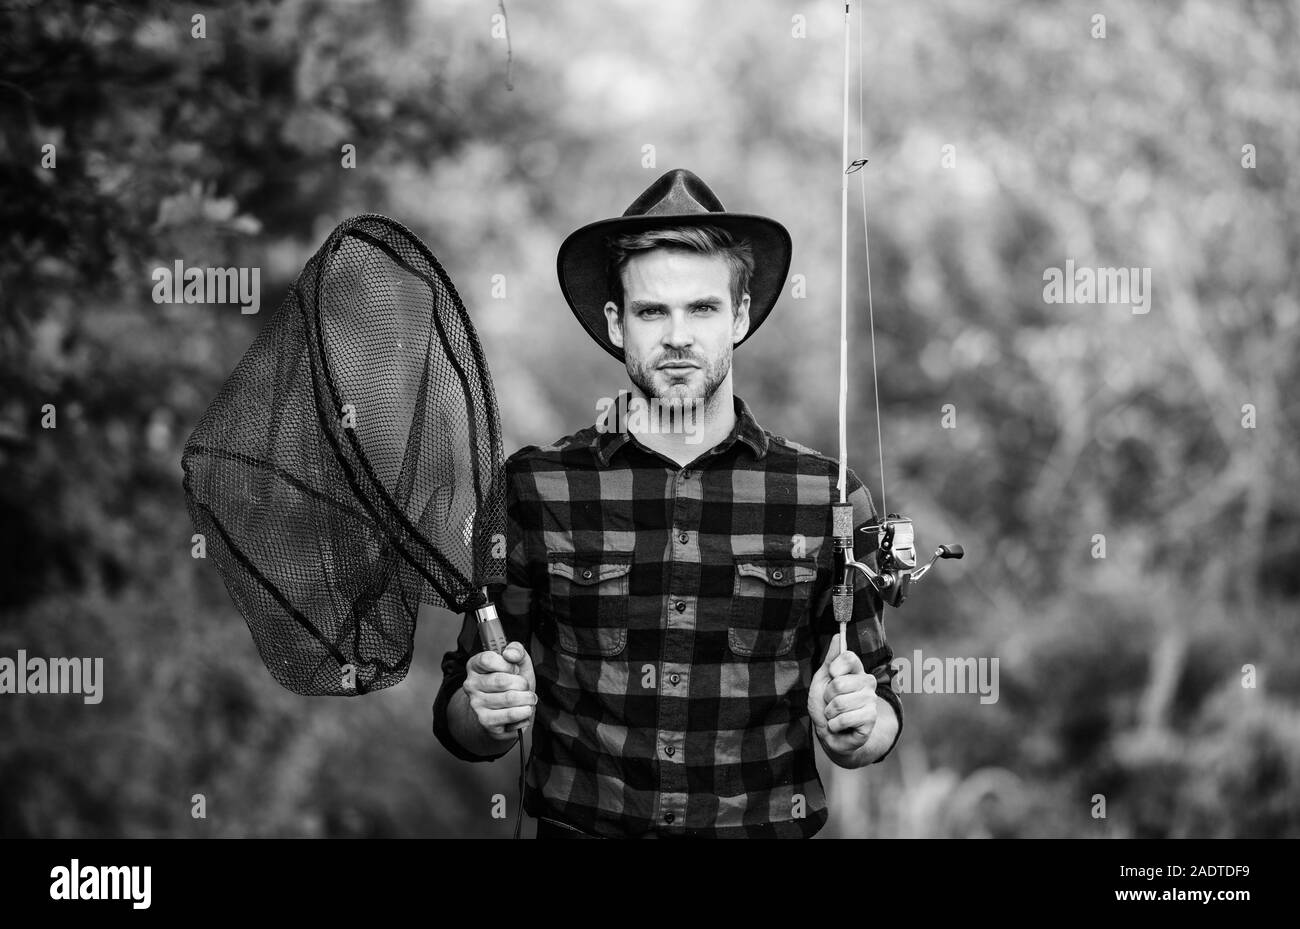 Man casting bait fishing net Black and White Stock Photos & Images - Alamy